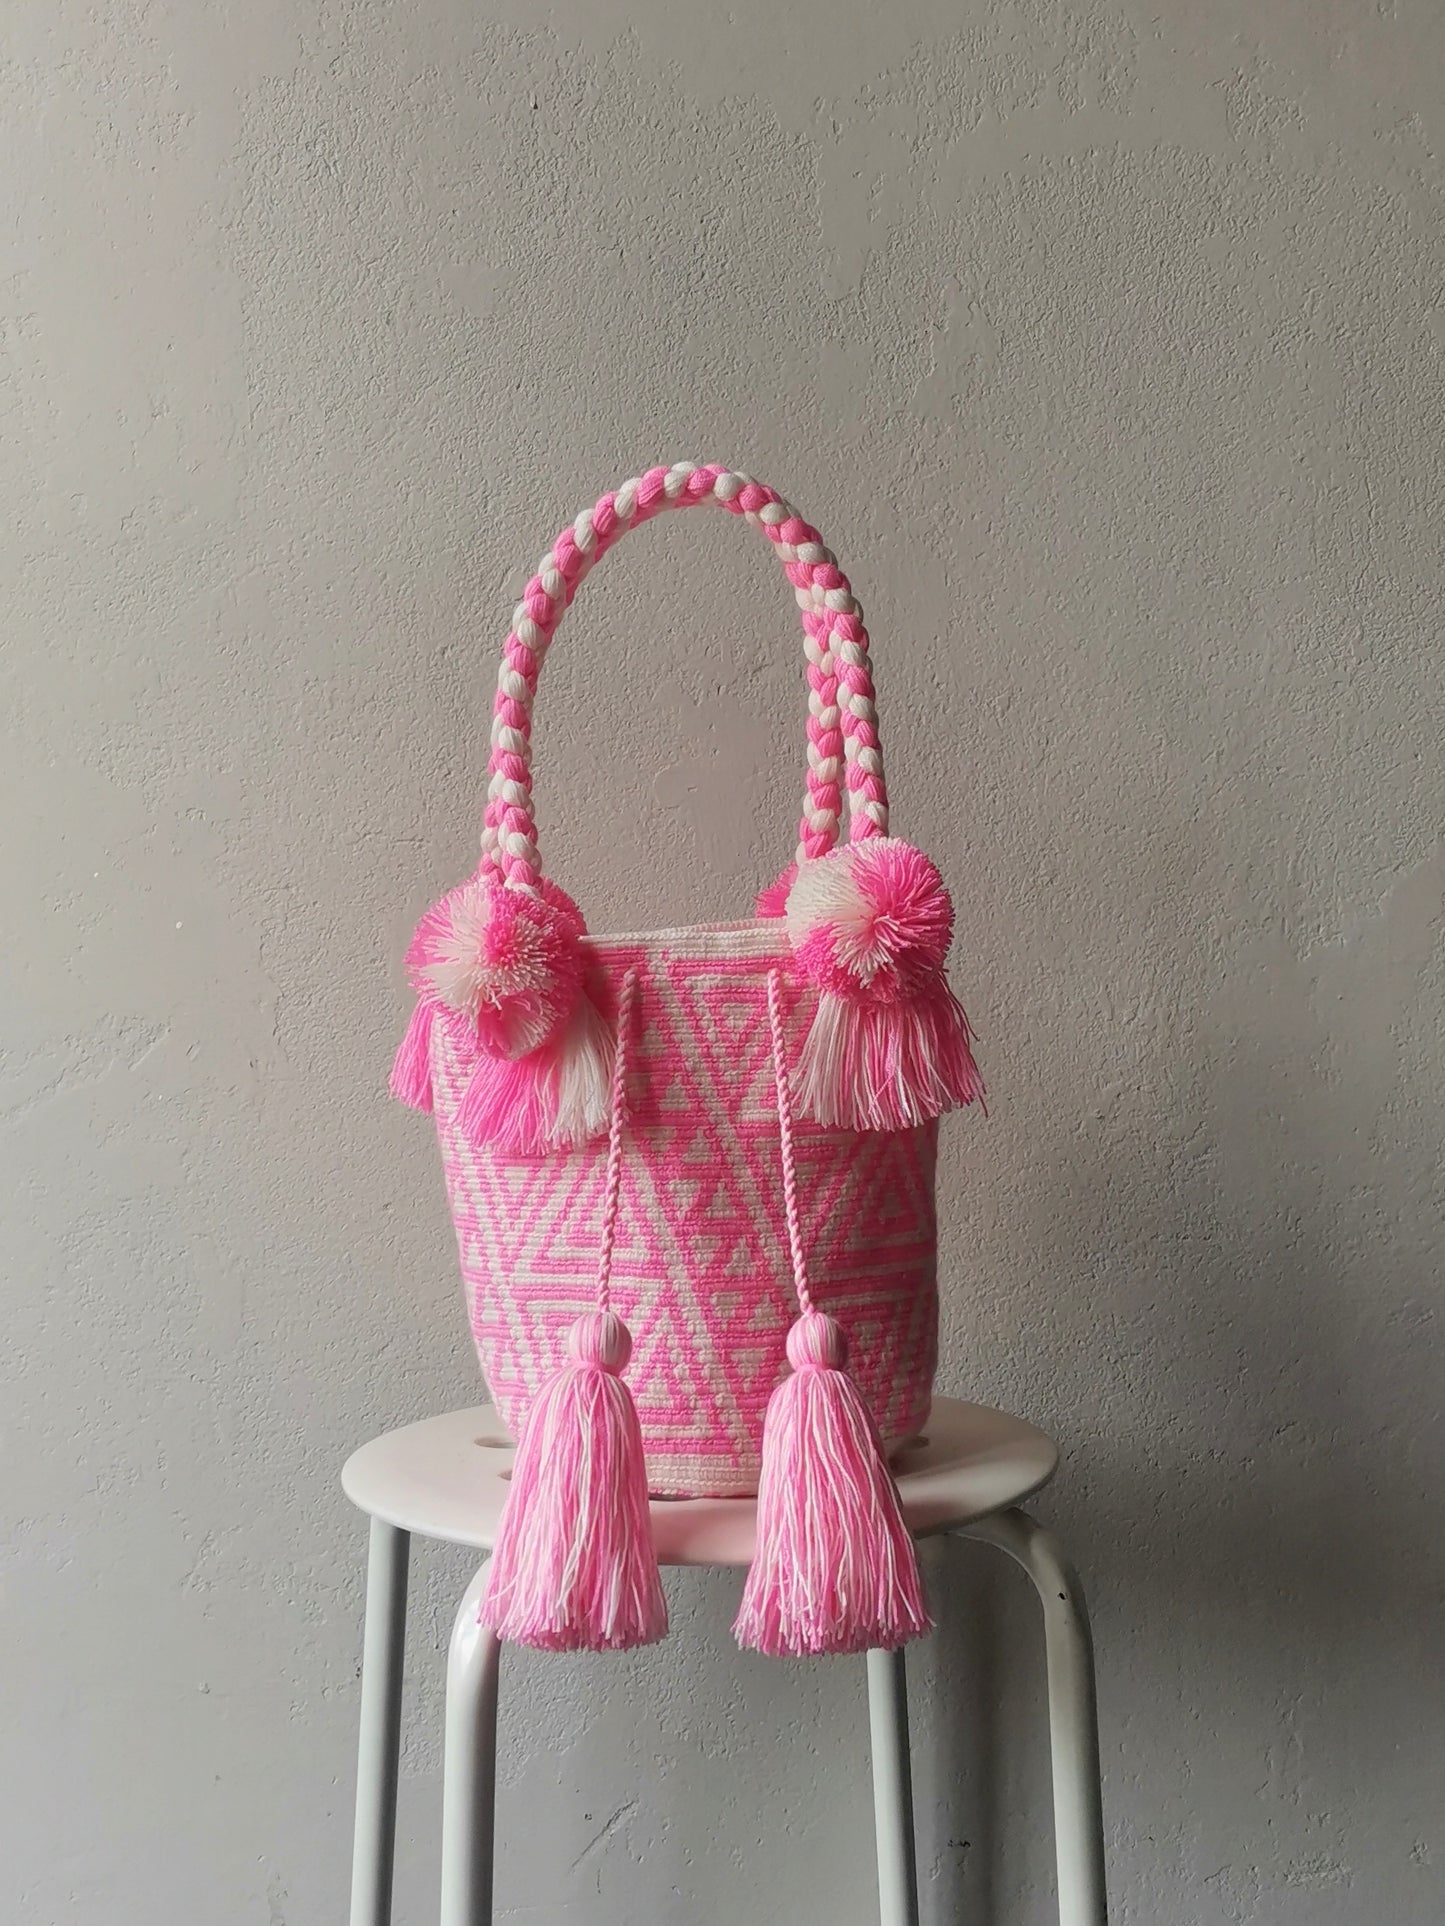 CAMPIONE - M white and pink mochila handbag